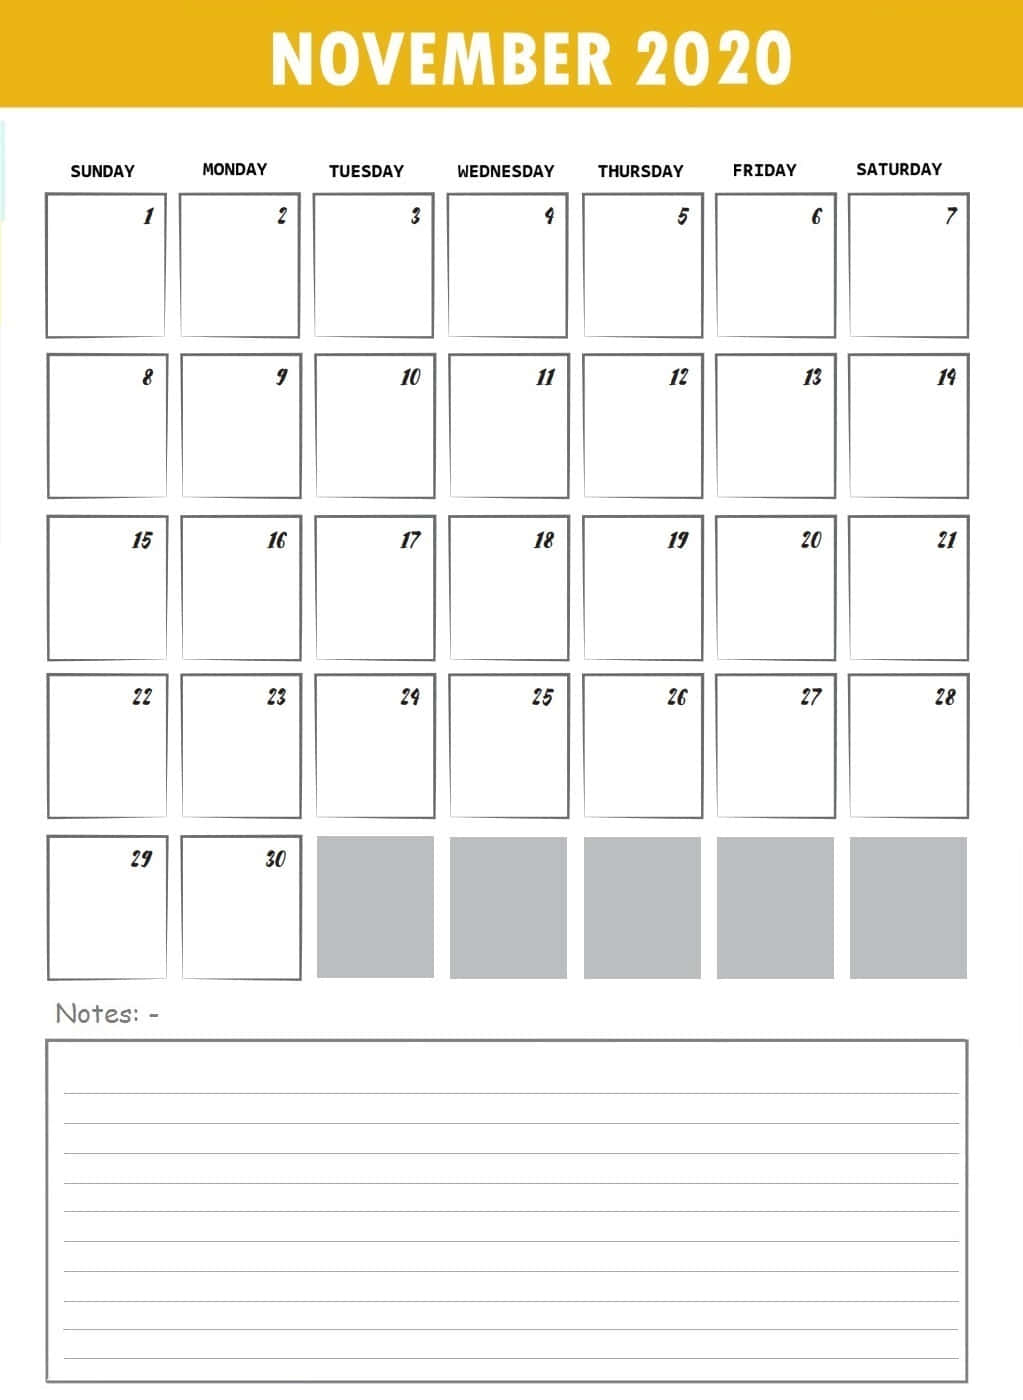 November 2020 Calendar Notepad Wallpaper